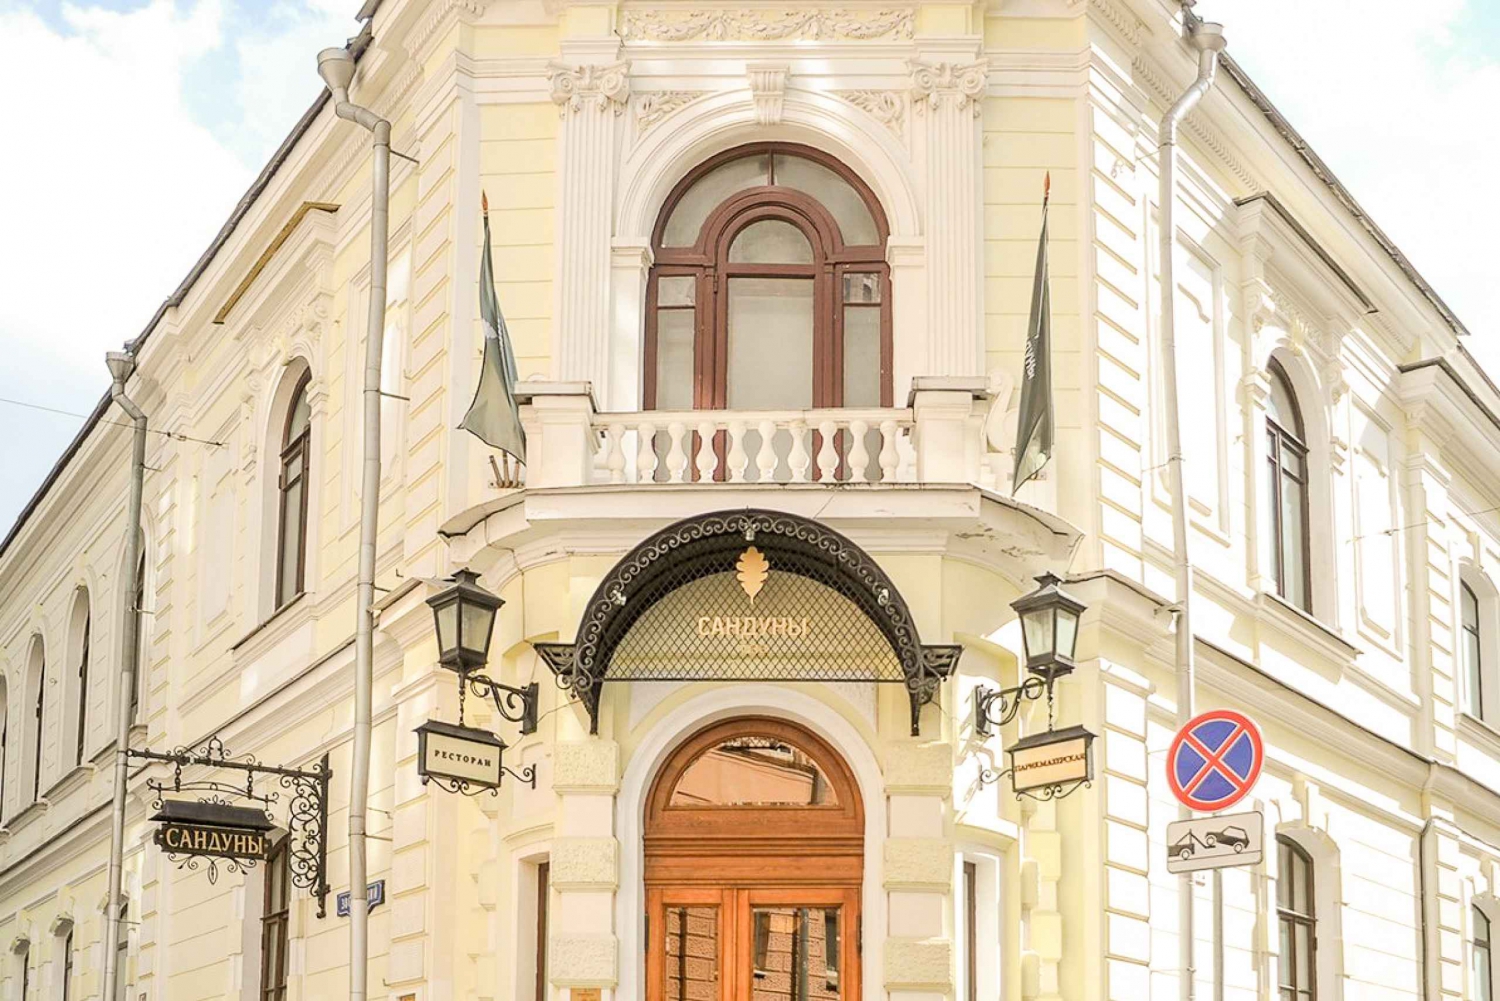 Moscow: Sanduny Baths Spa Ticket with Hotel Pickup